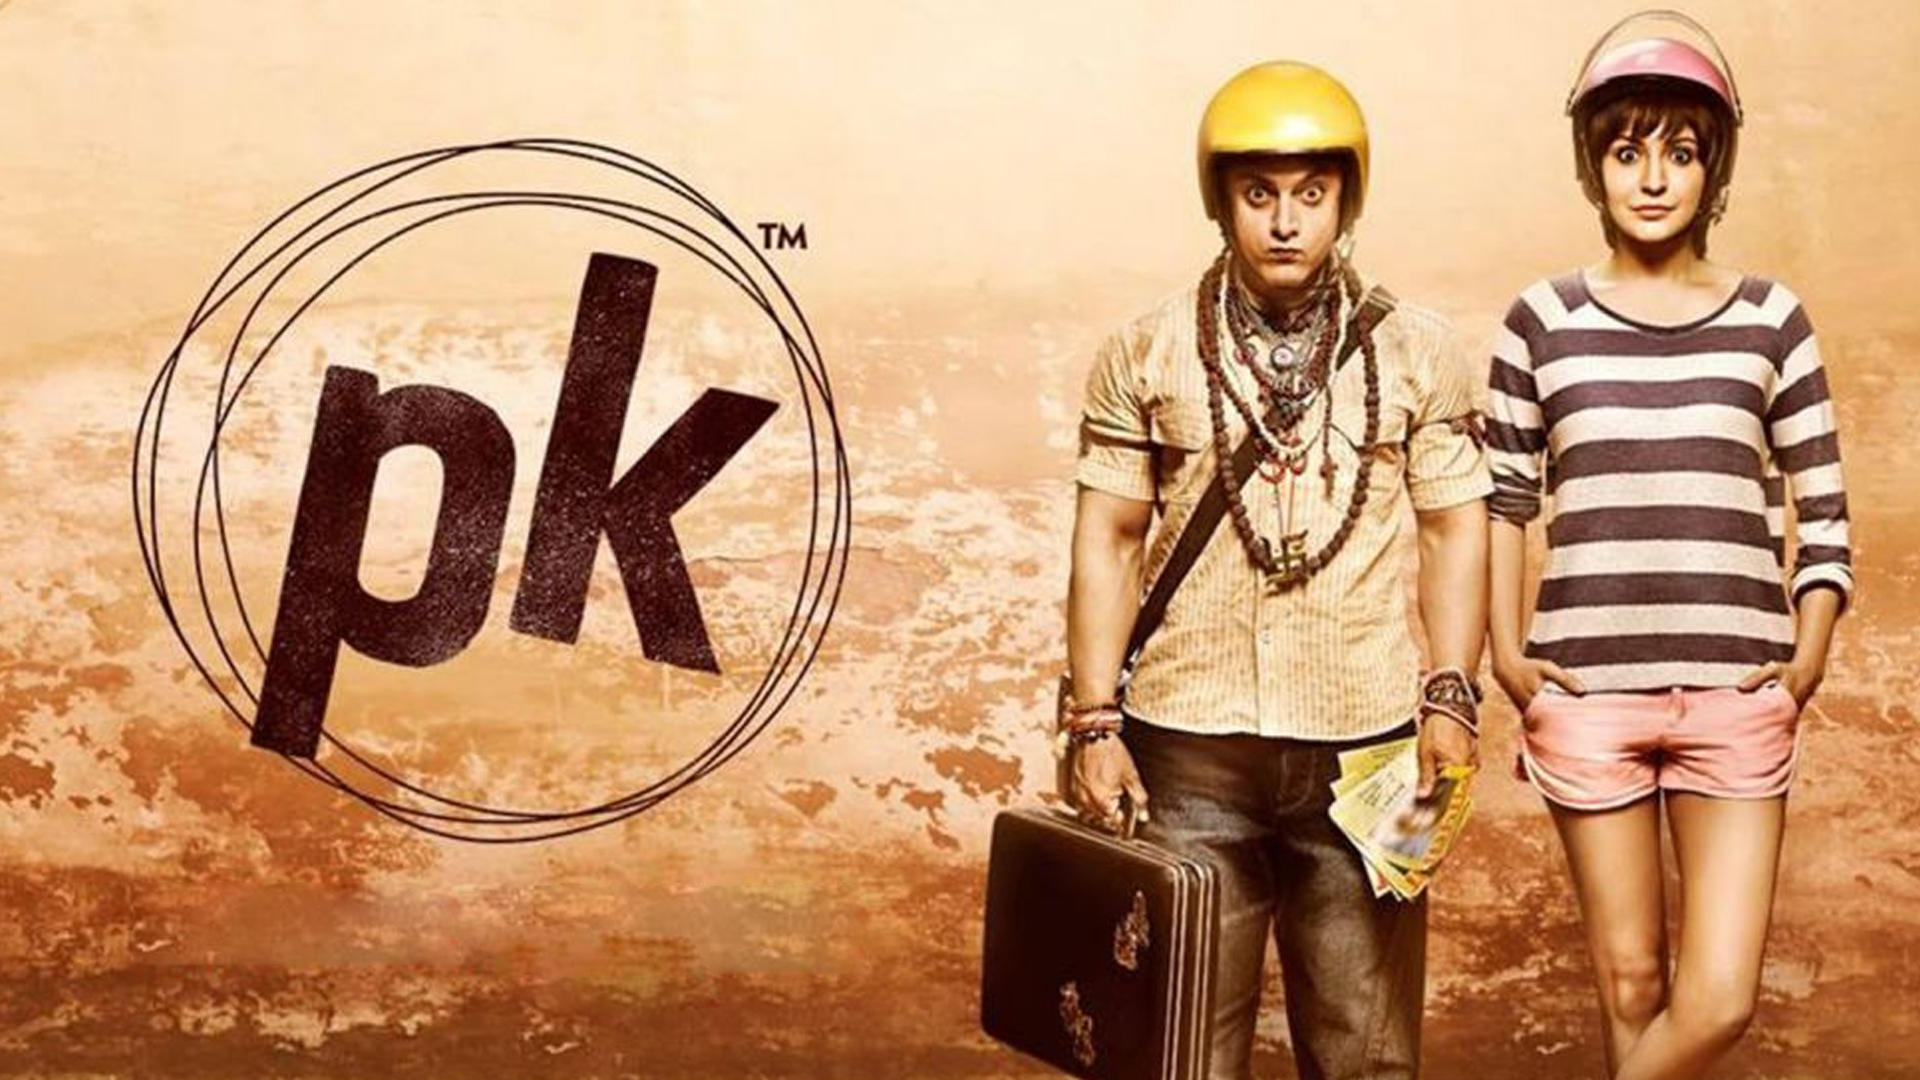 Watch PK Hindi Movie Online in Full HD on Sony LIV